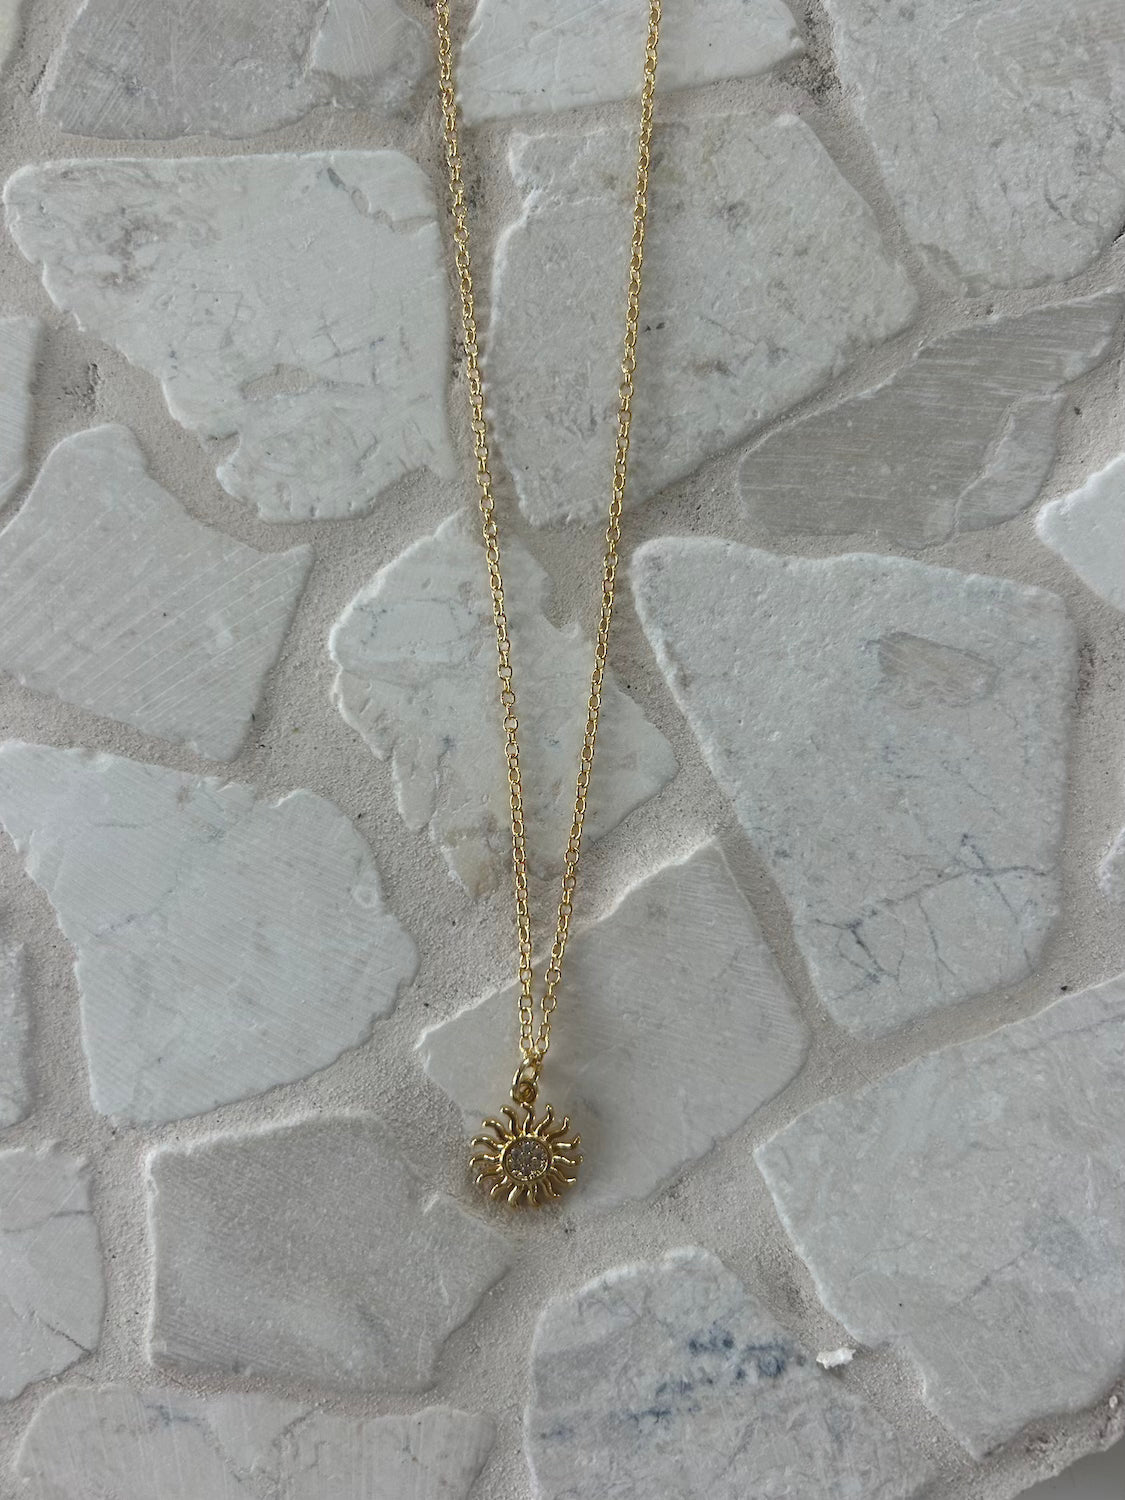 Sun Dancer Necklace - Malia Jewellery - 18k gold plated wavy sun rays necklace design - beachy jewellery